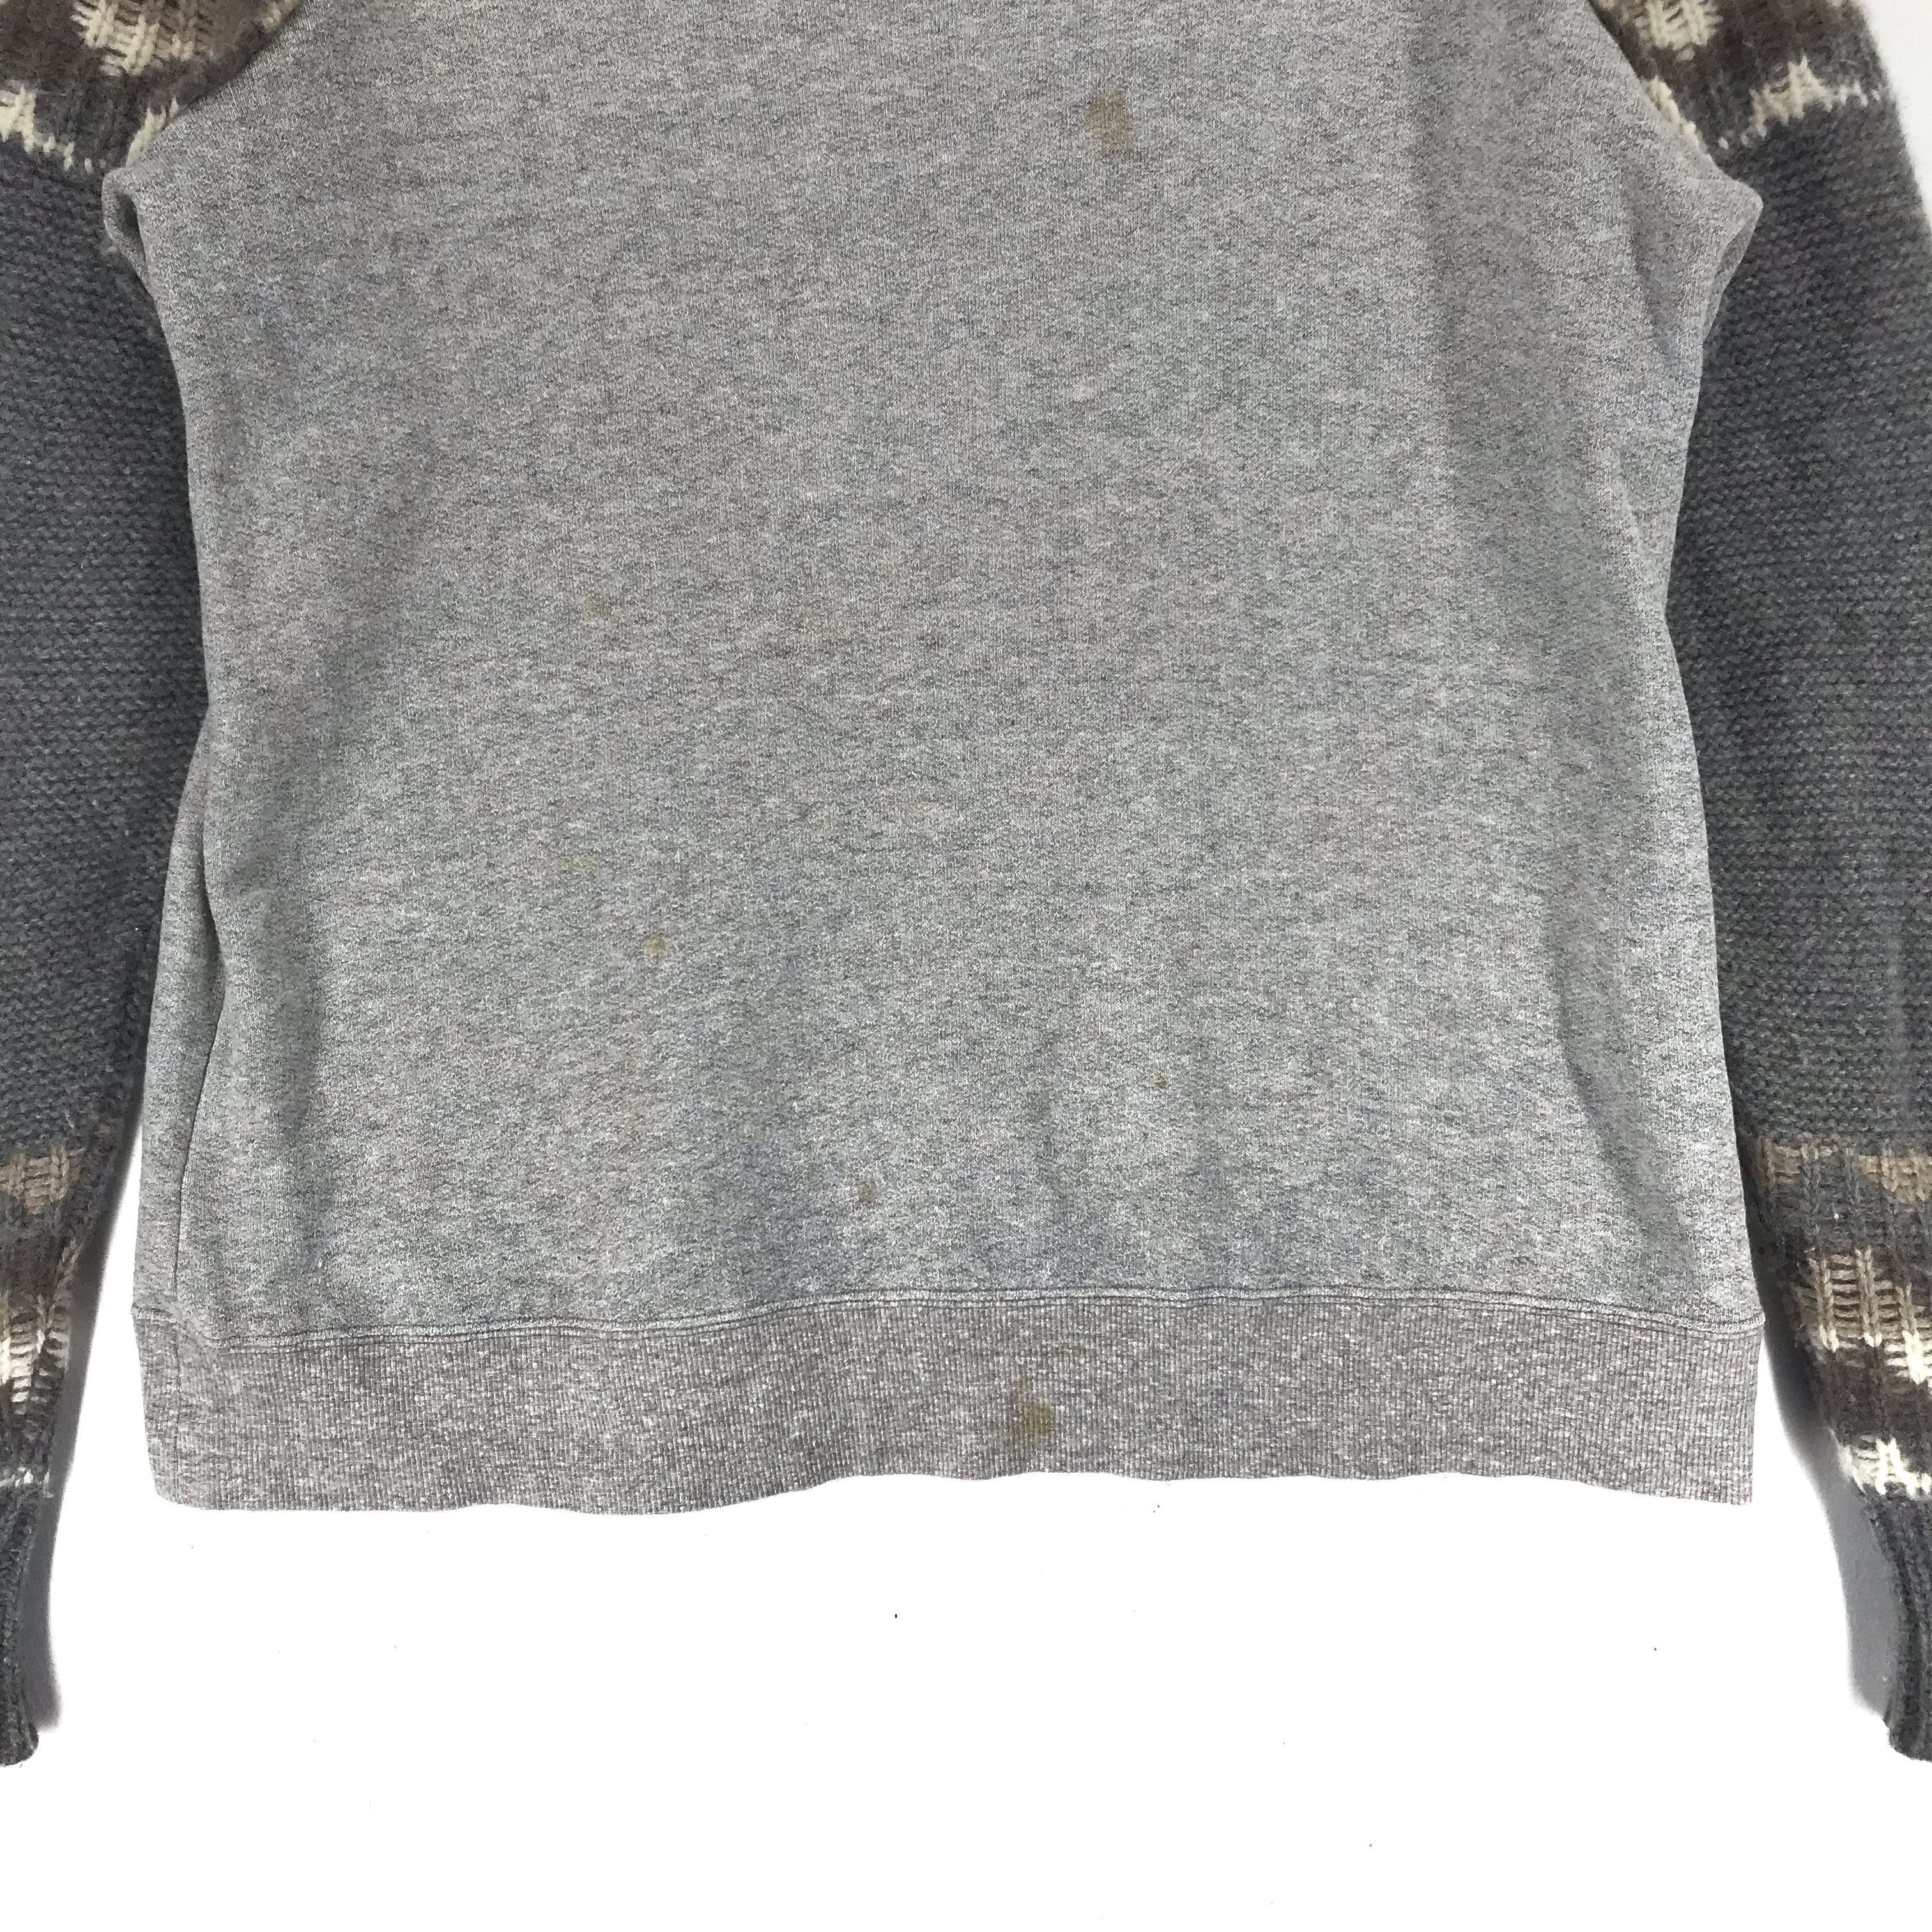 Y's Sleeve Hybrid Knit Sweater #2326-91 - 4